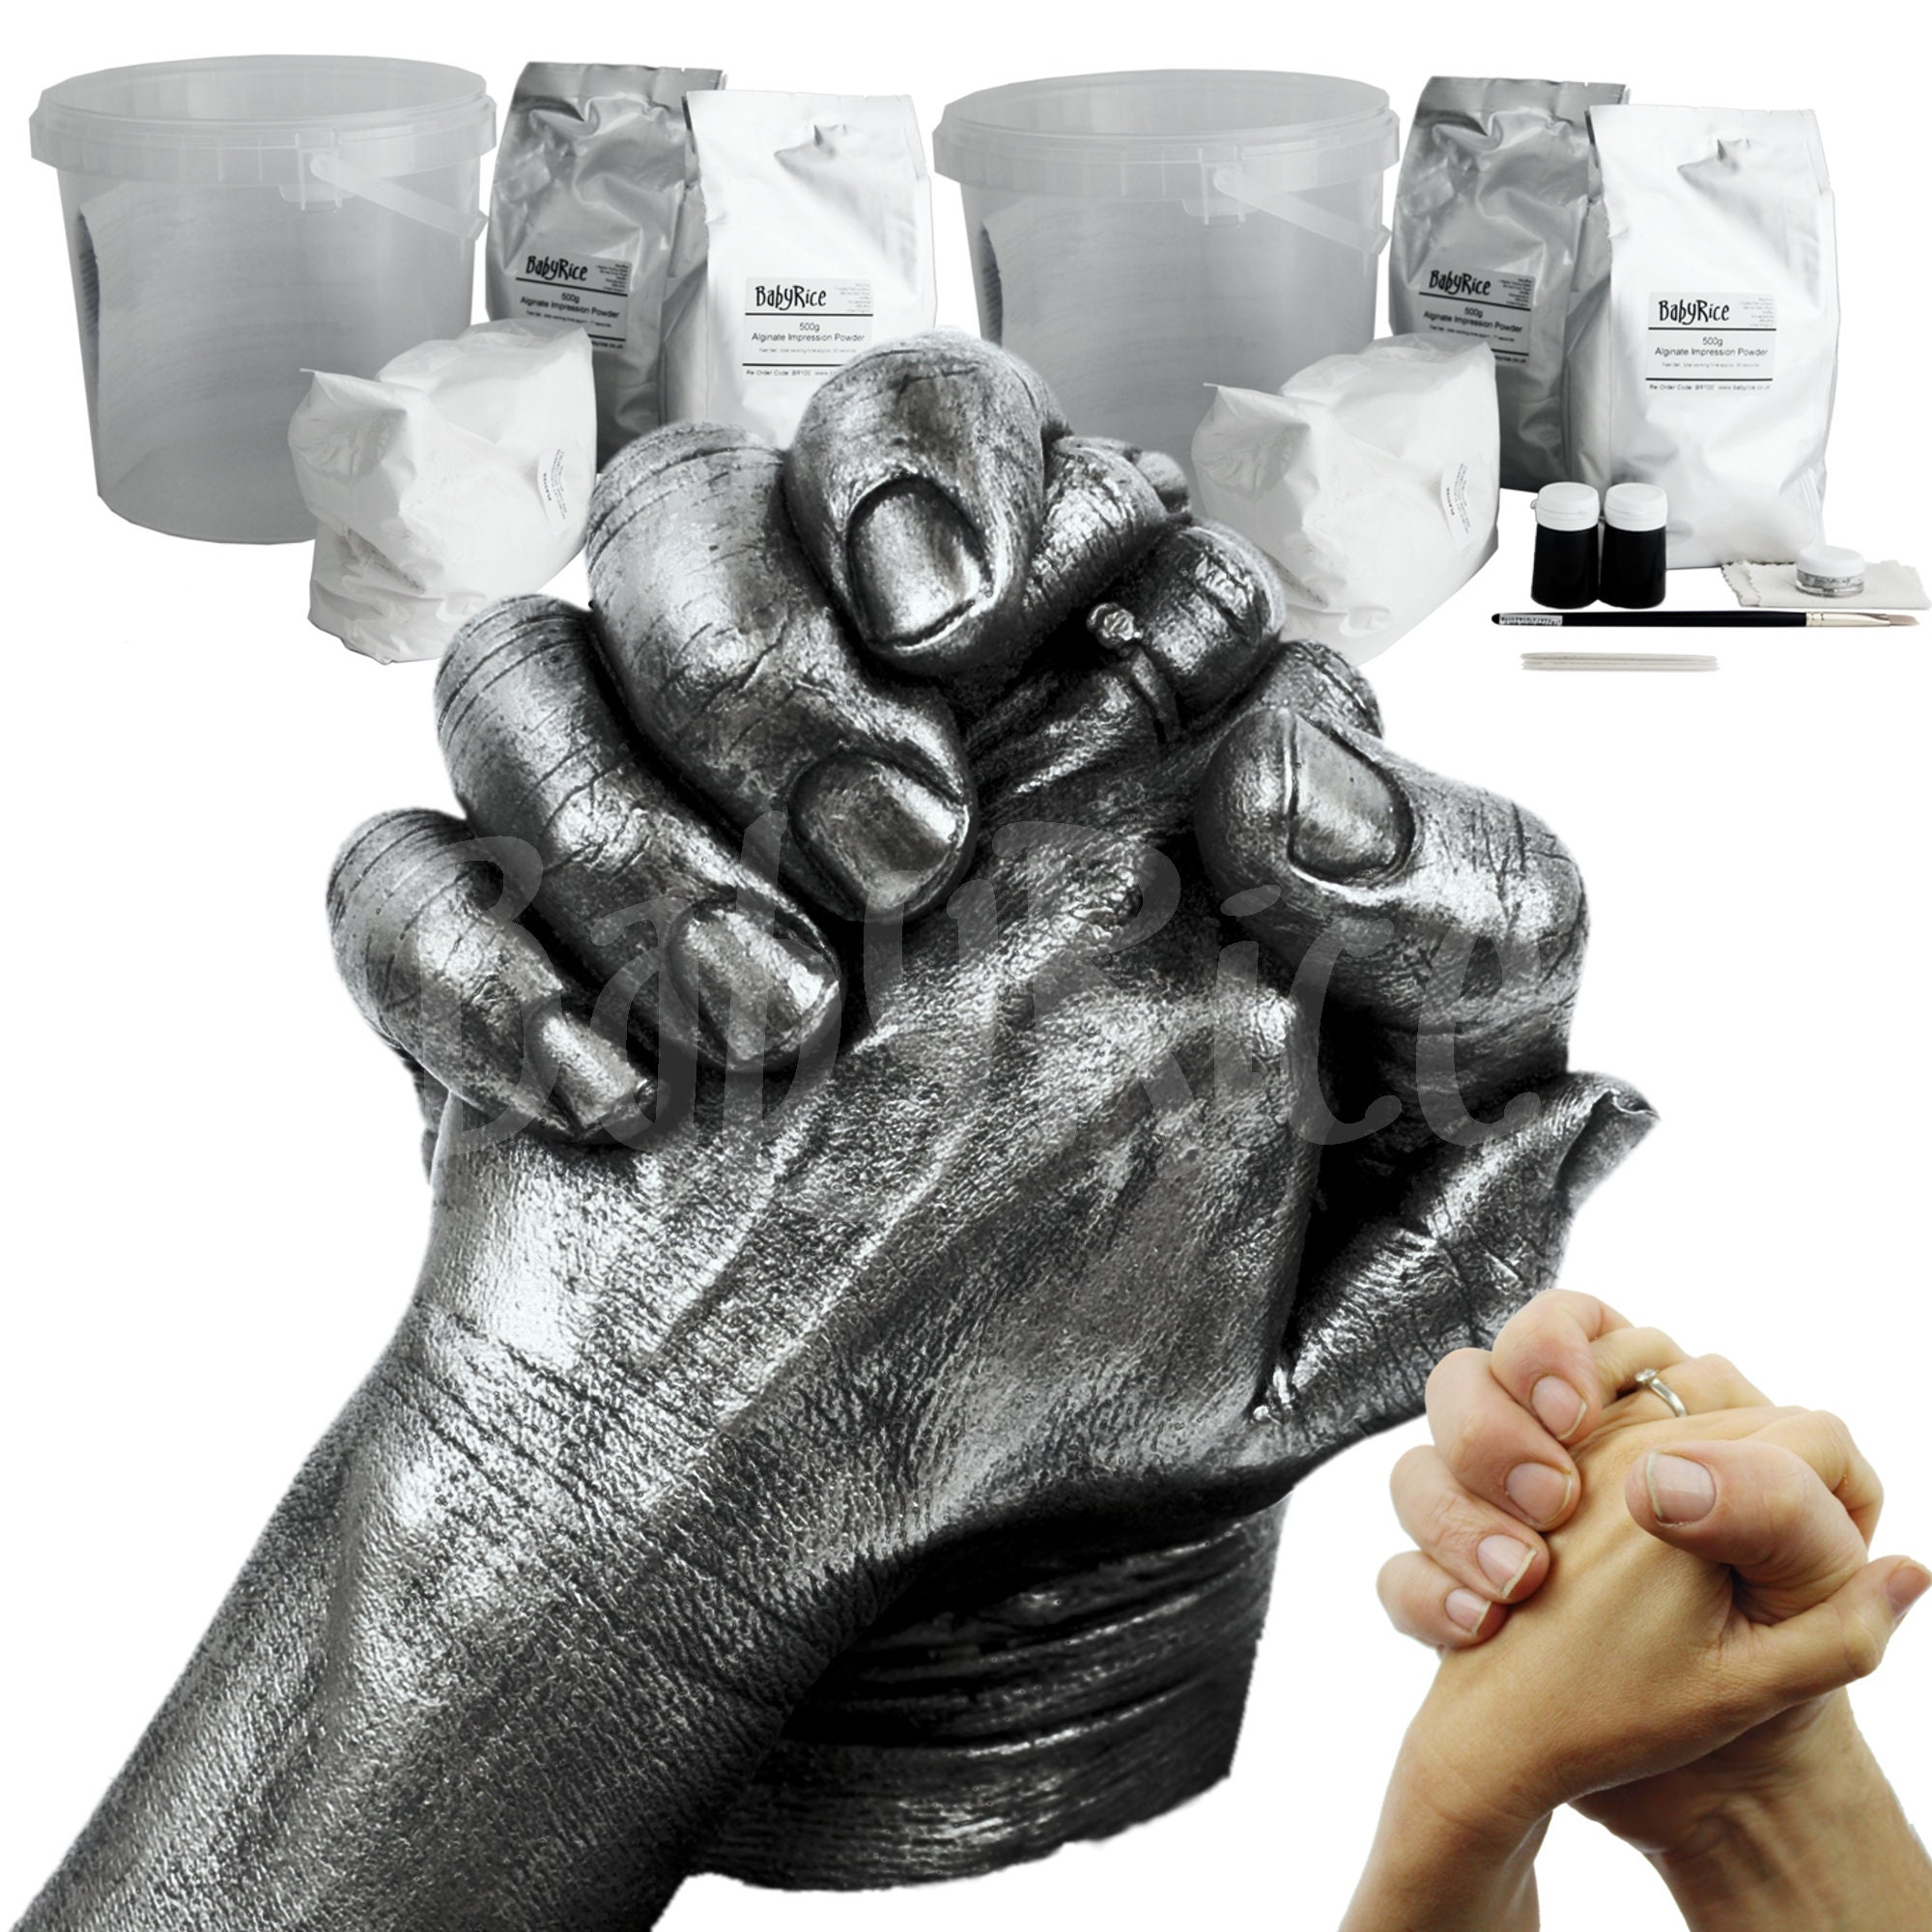 Adult 3D Life Casting Kit 2 Hand Casts - Pewter Metallic Paint